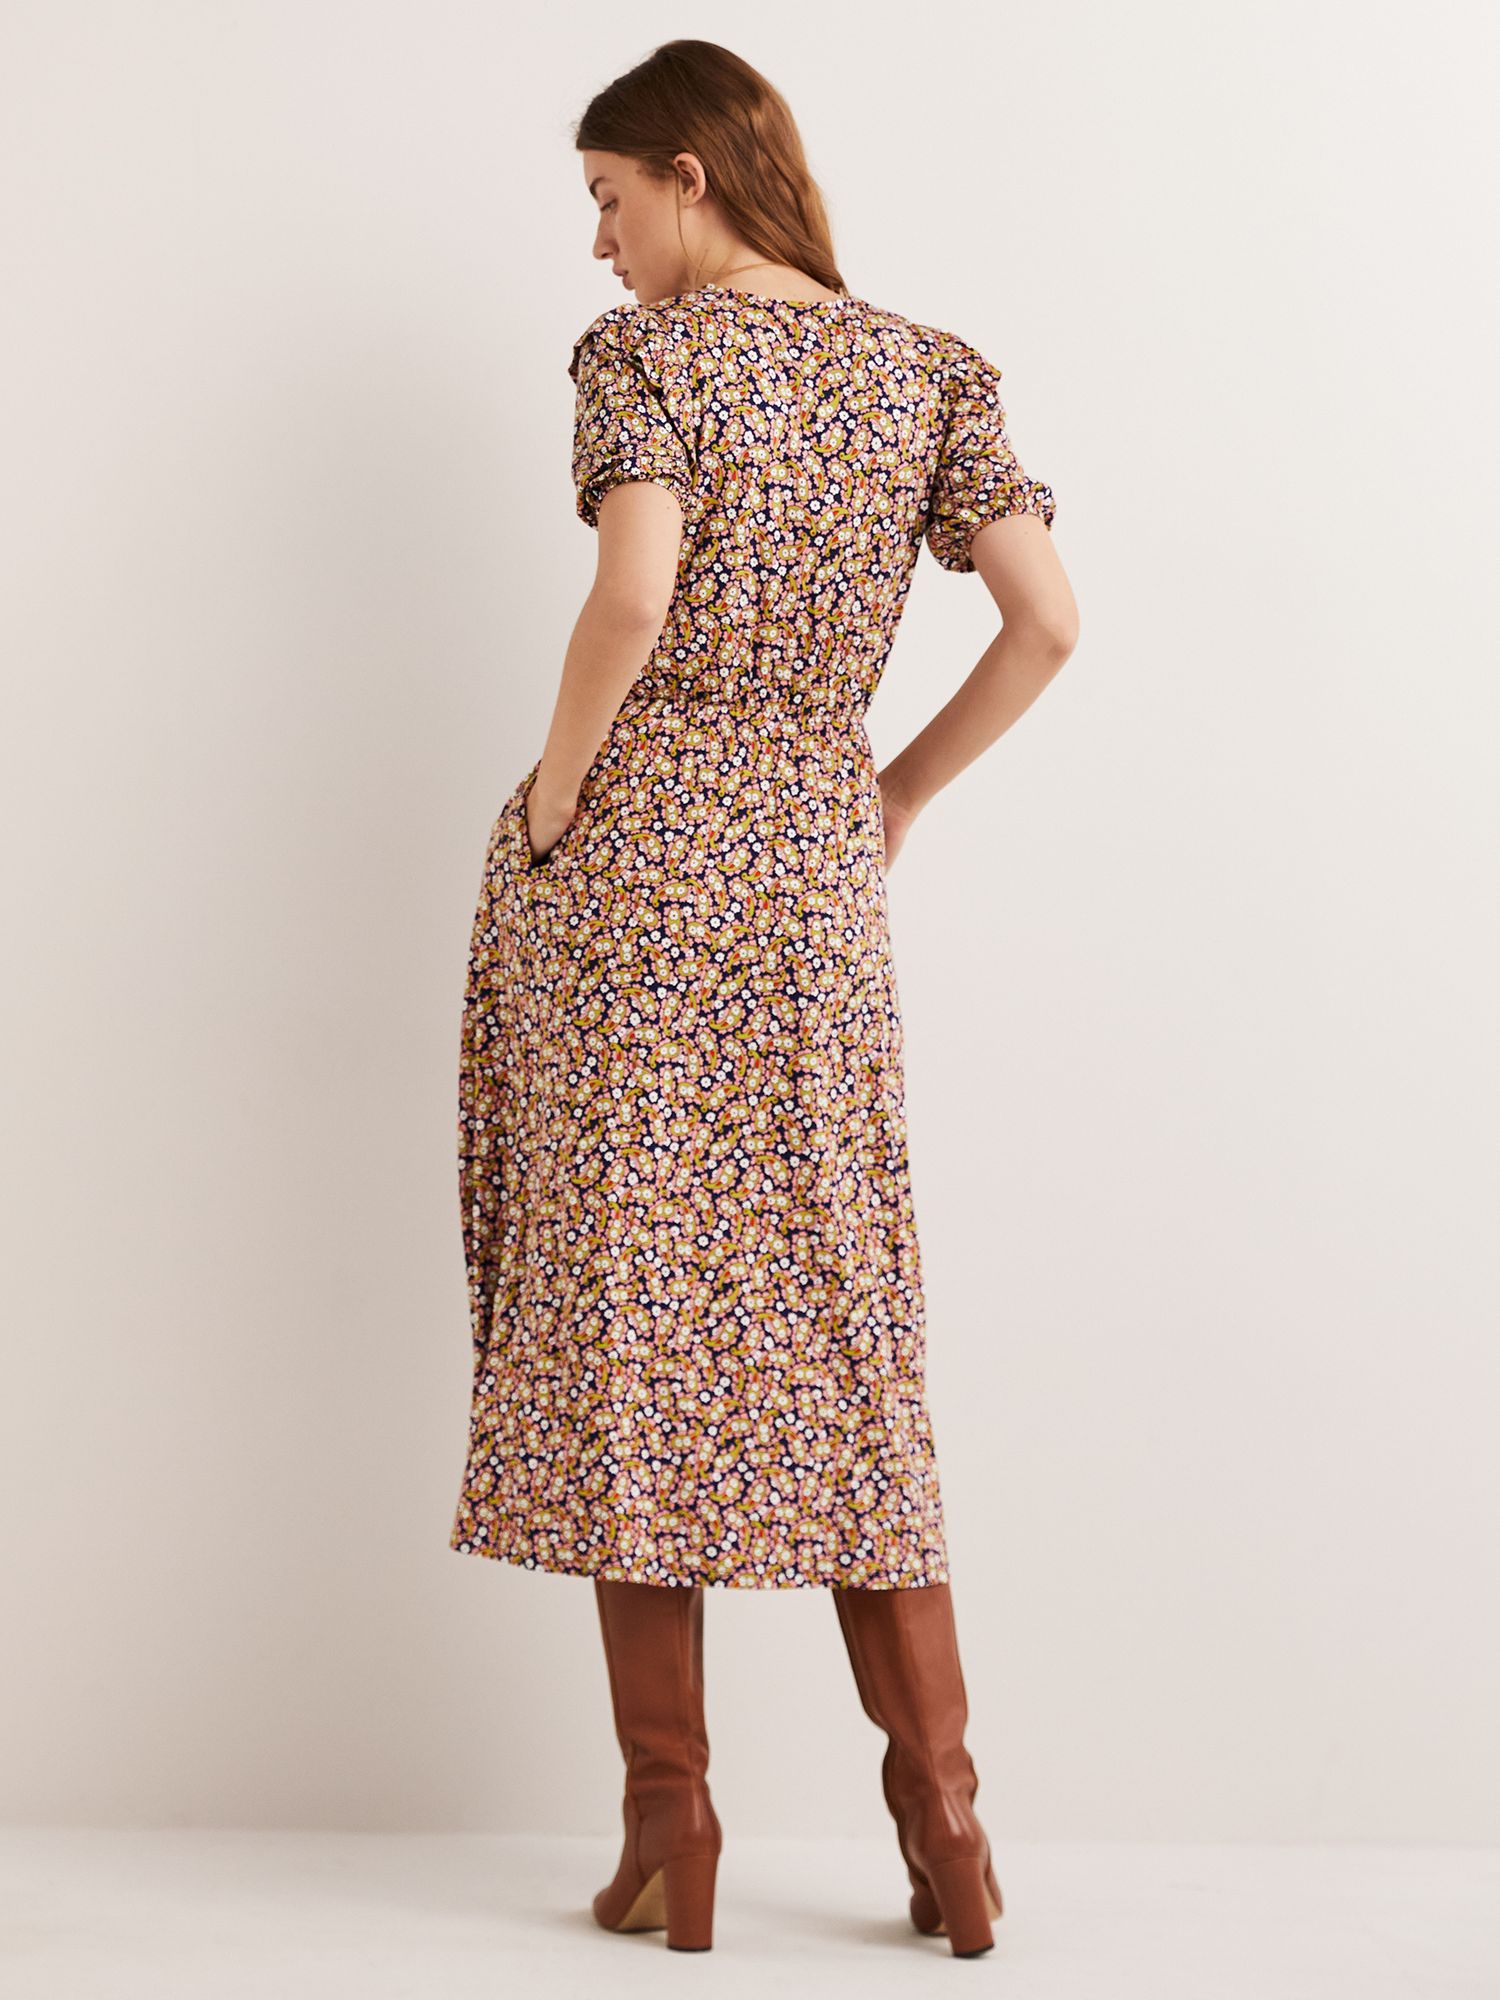 Boden Paisley Print Ruffle Jersey Midi Dress, Citronelle/Multi, 8